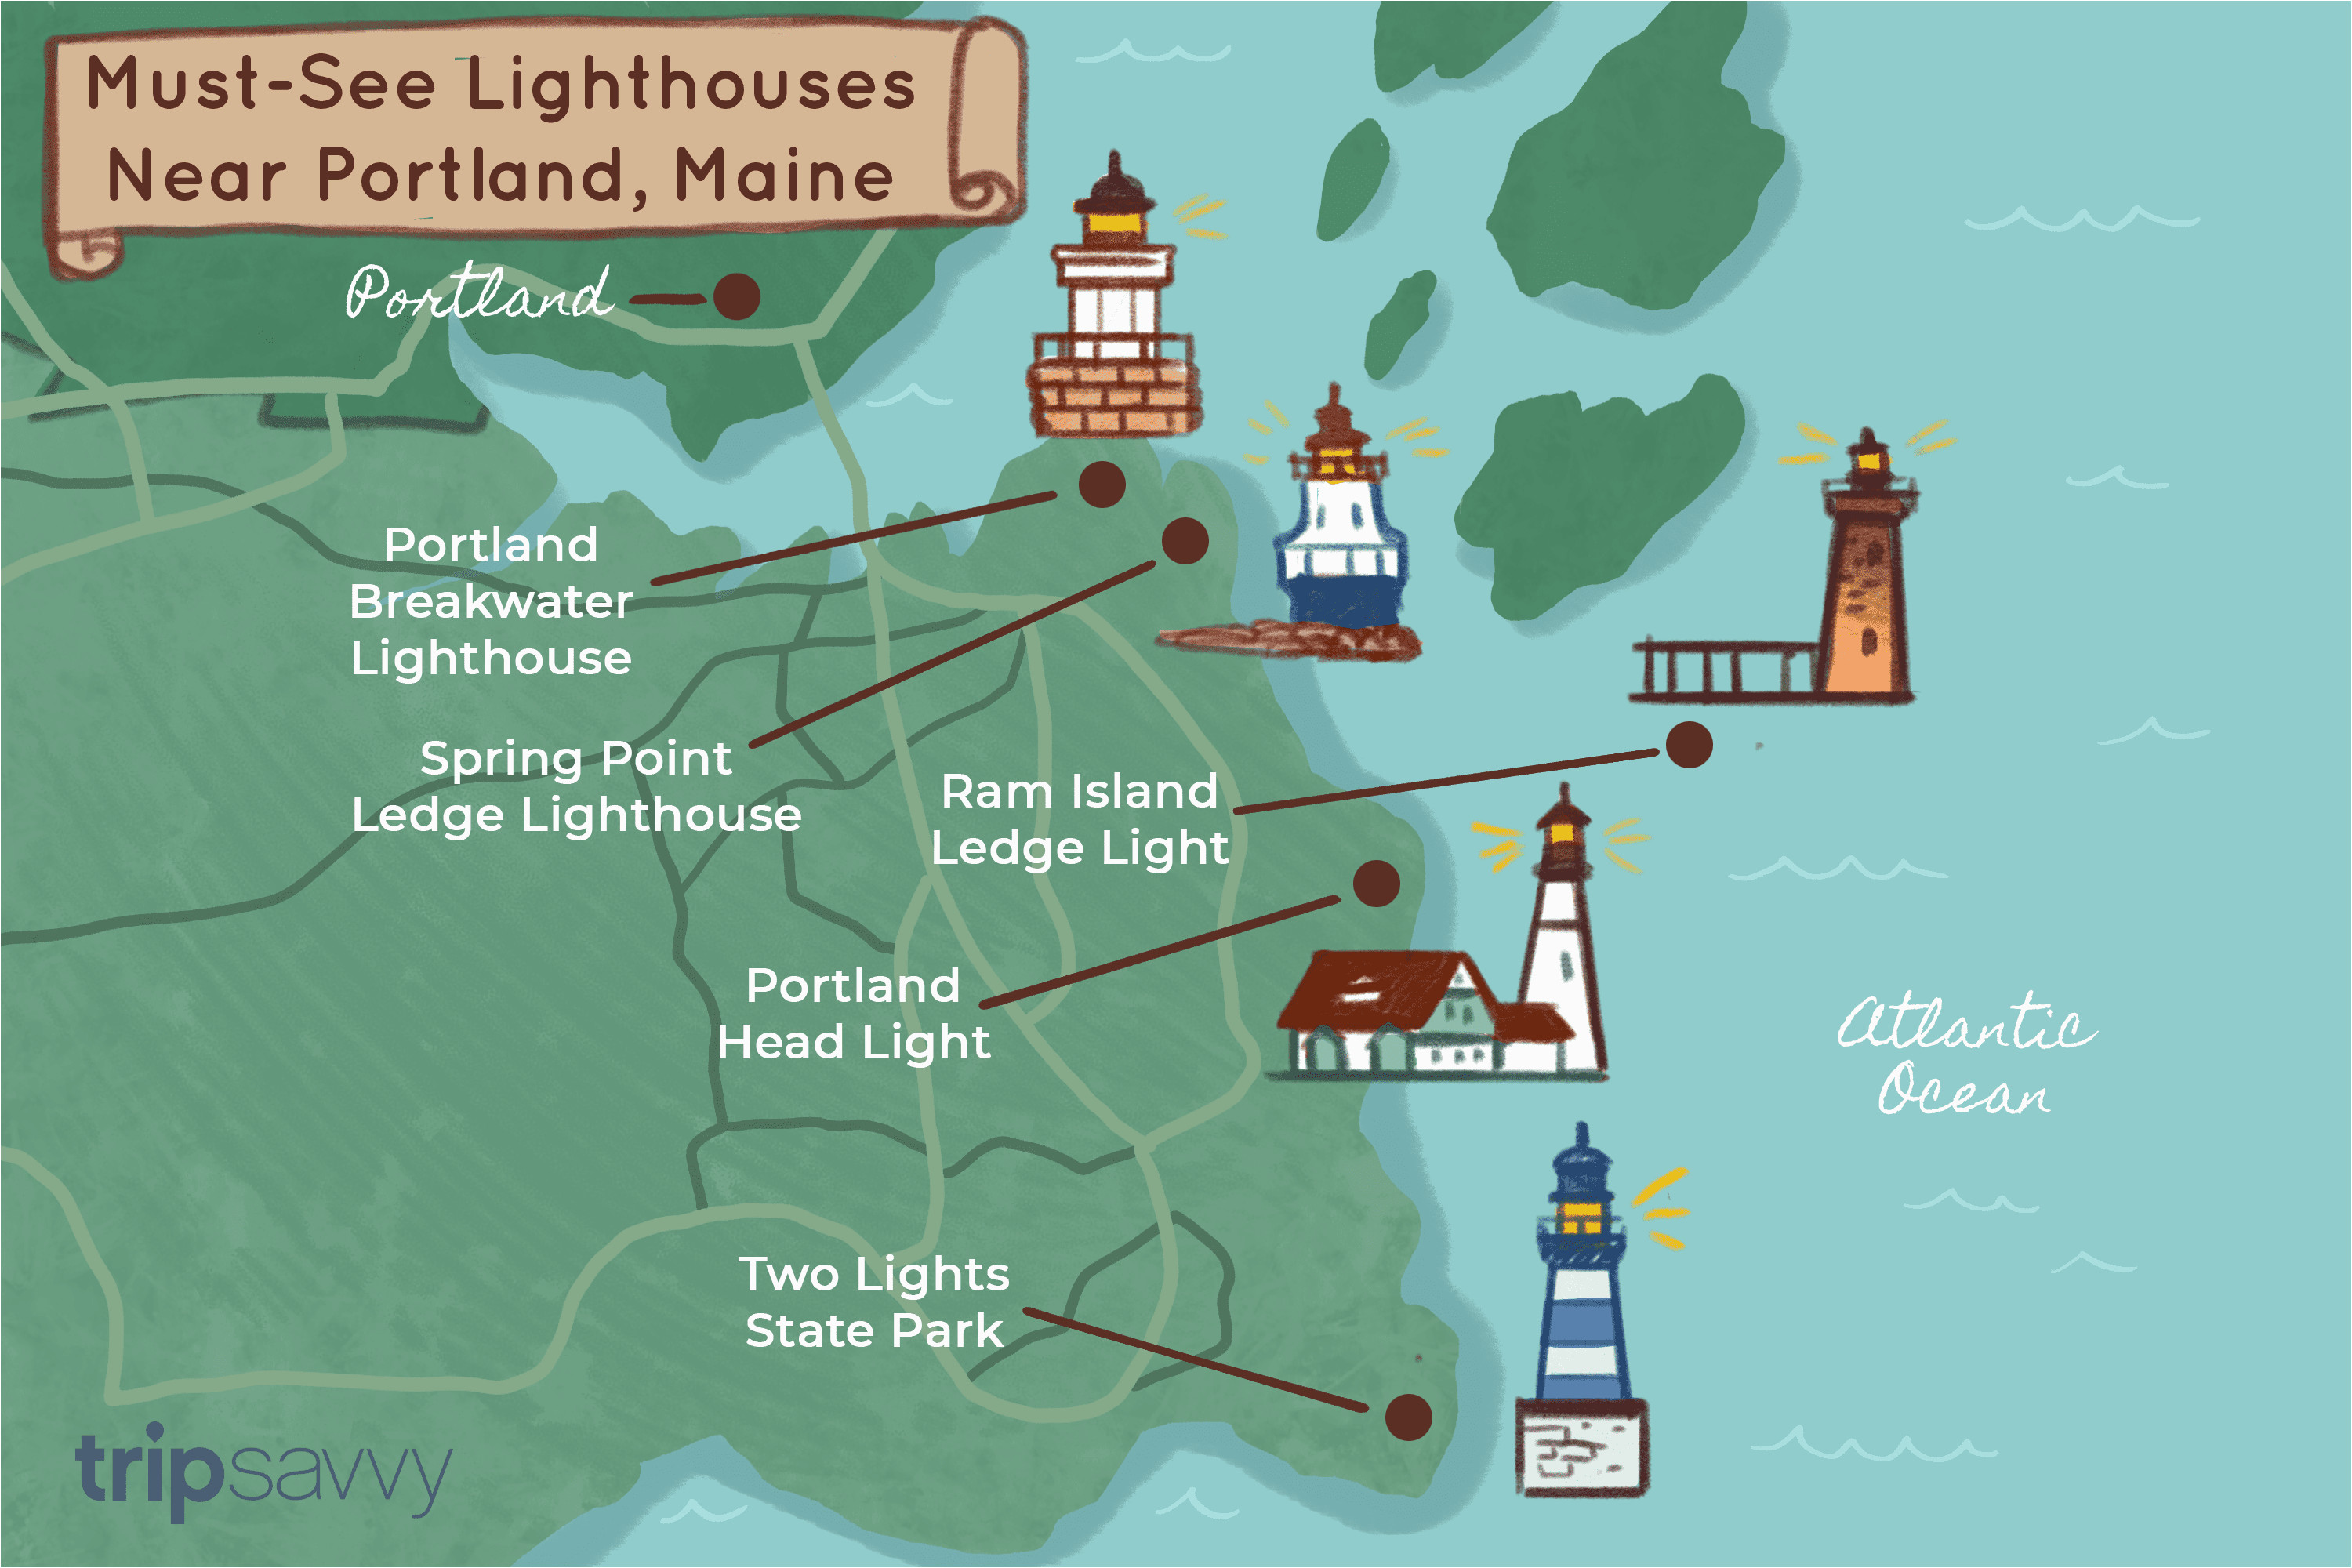 5 lighthouses to see near portland maine